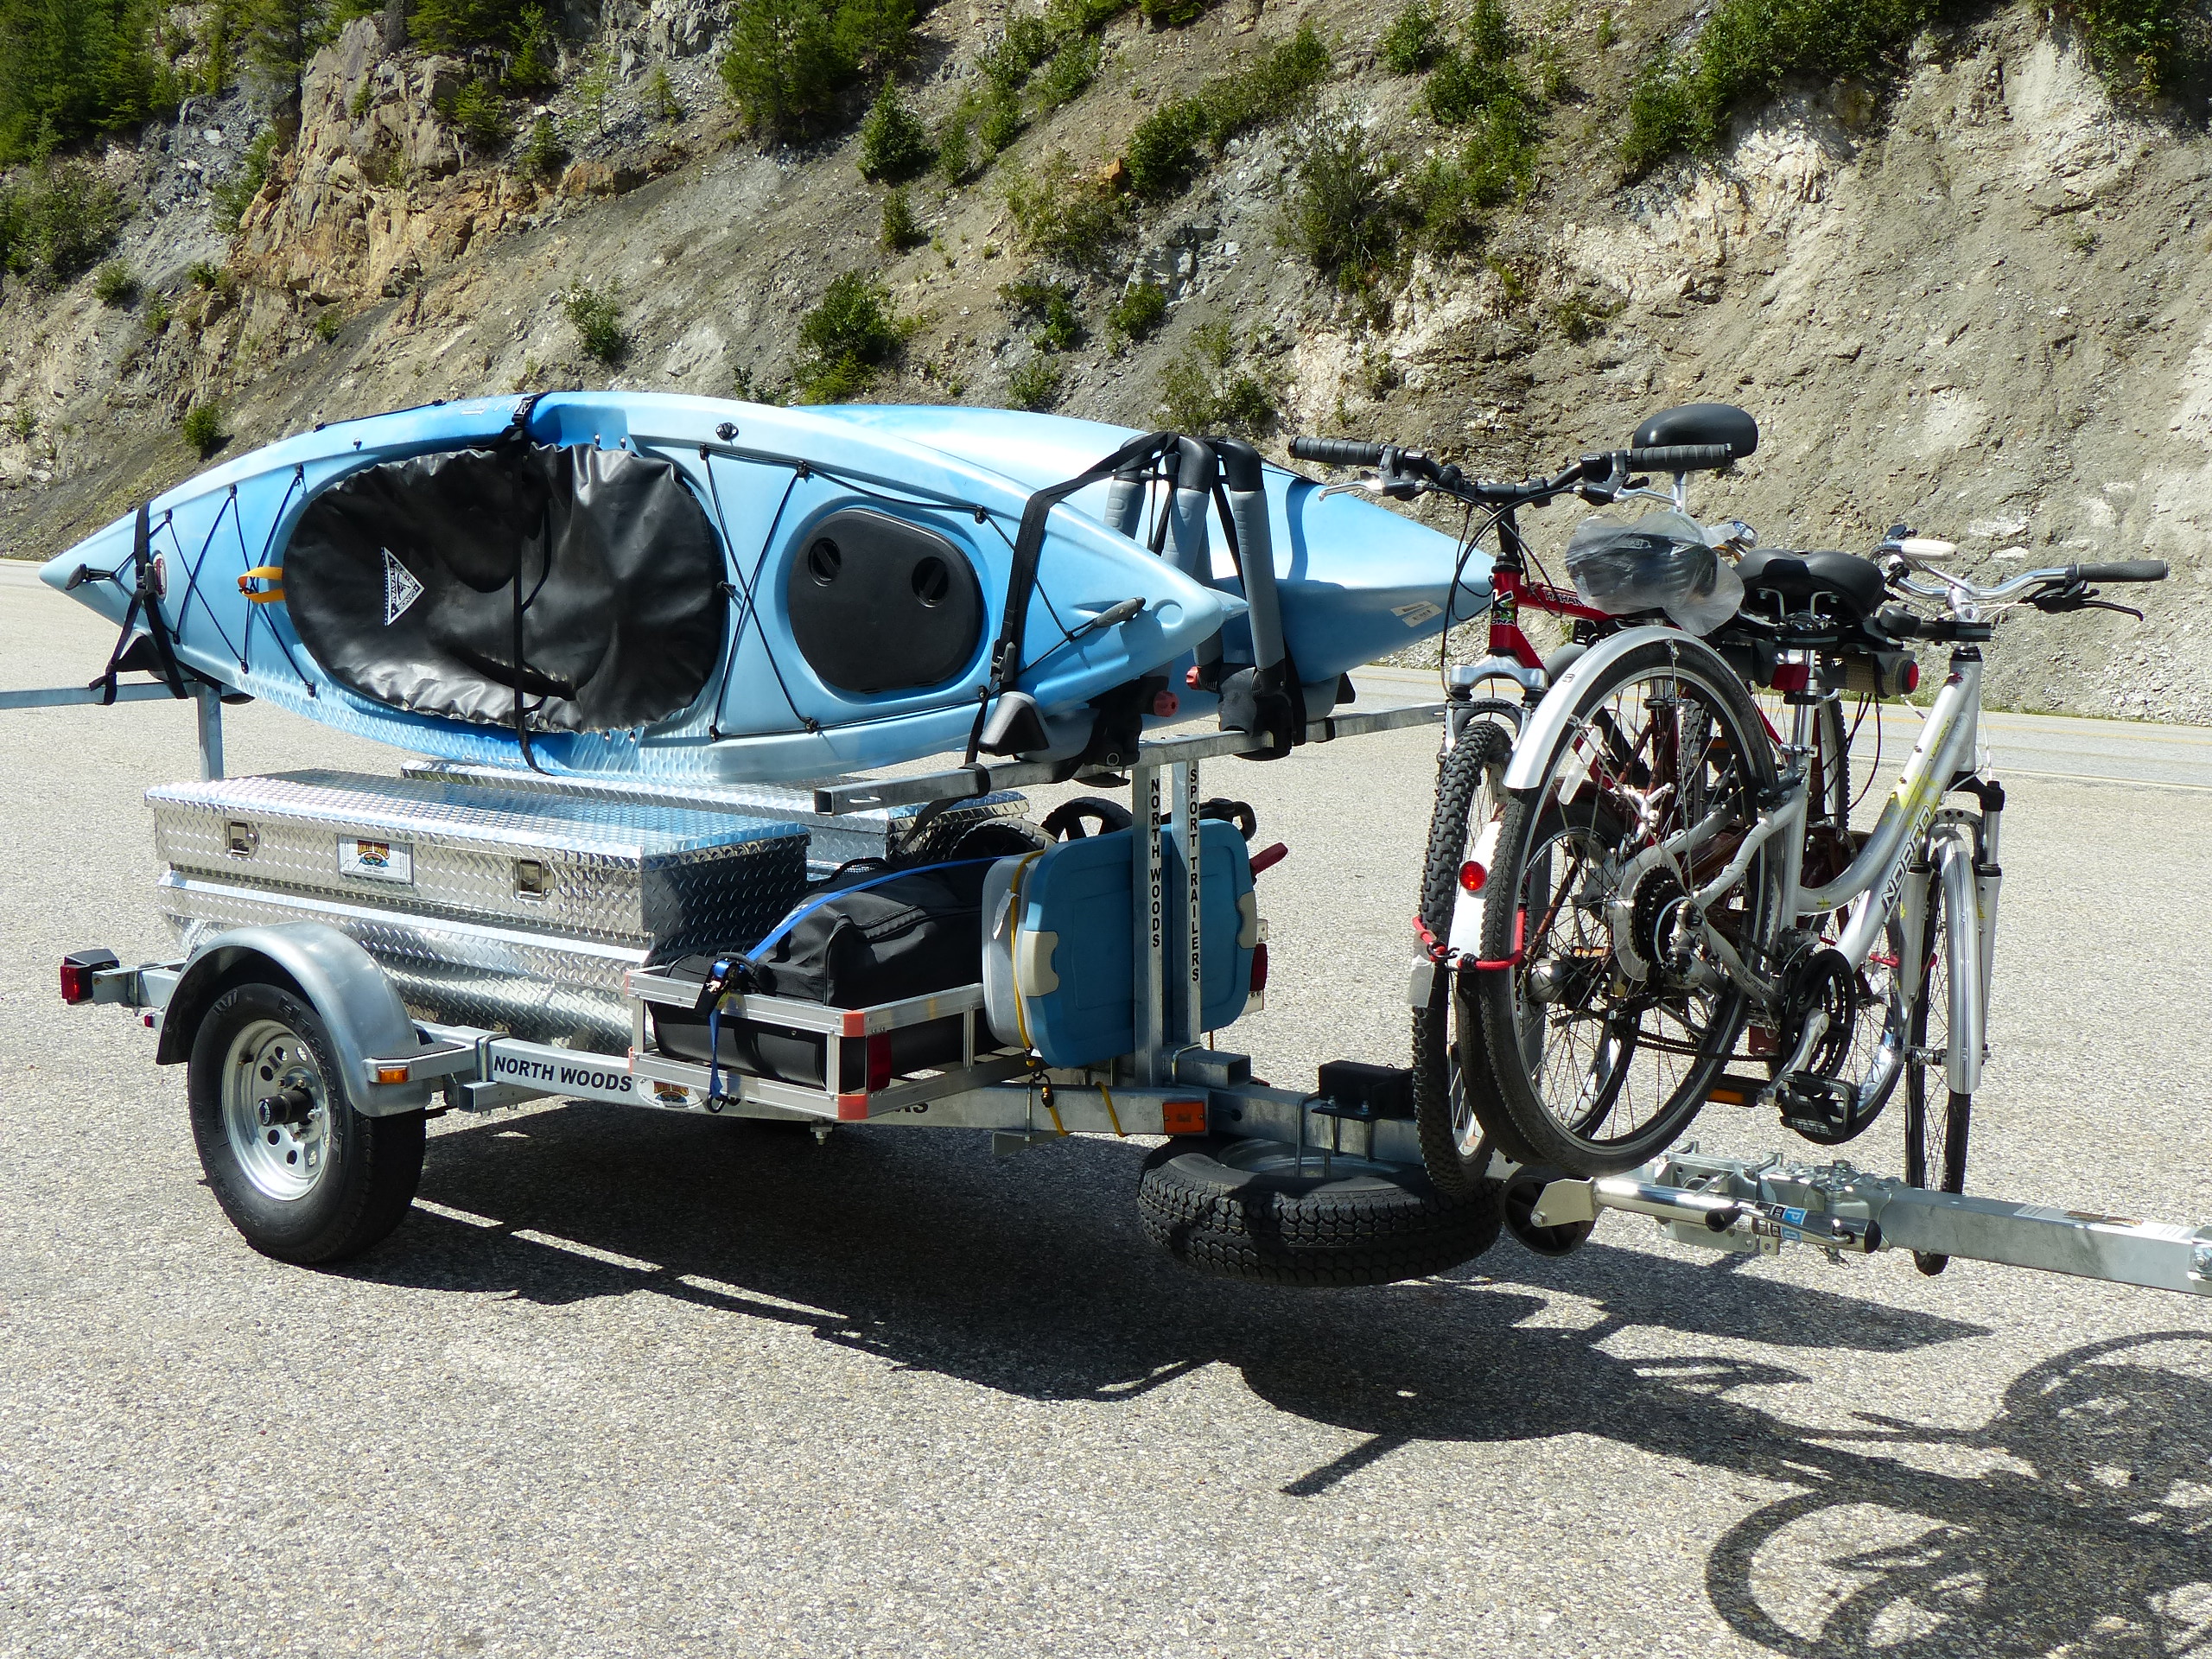 Bike trailer for SUPs, kayaks, shopping and more - reacha